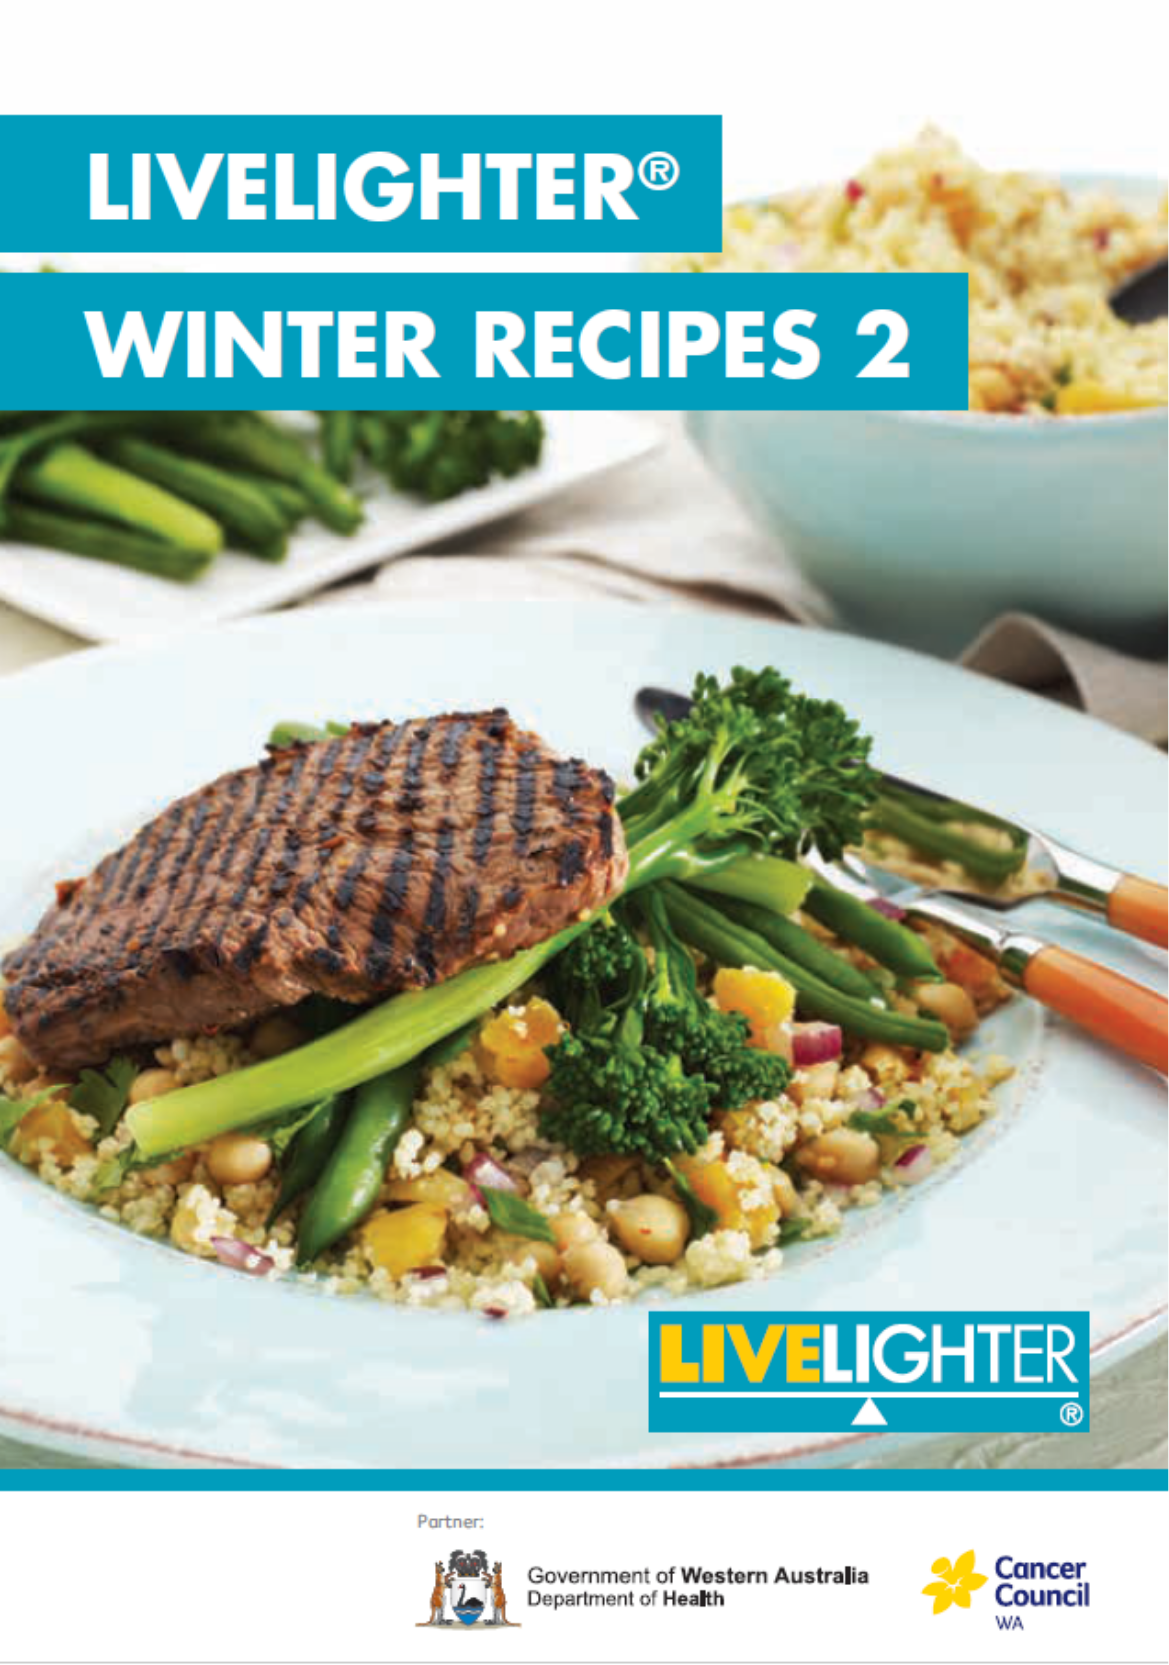 Winter Recipes booklet 2